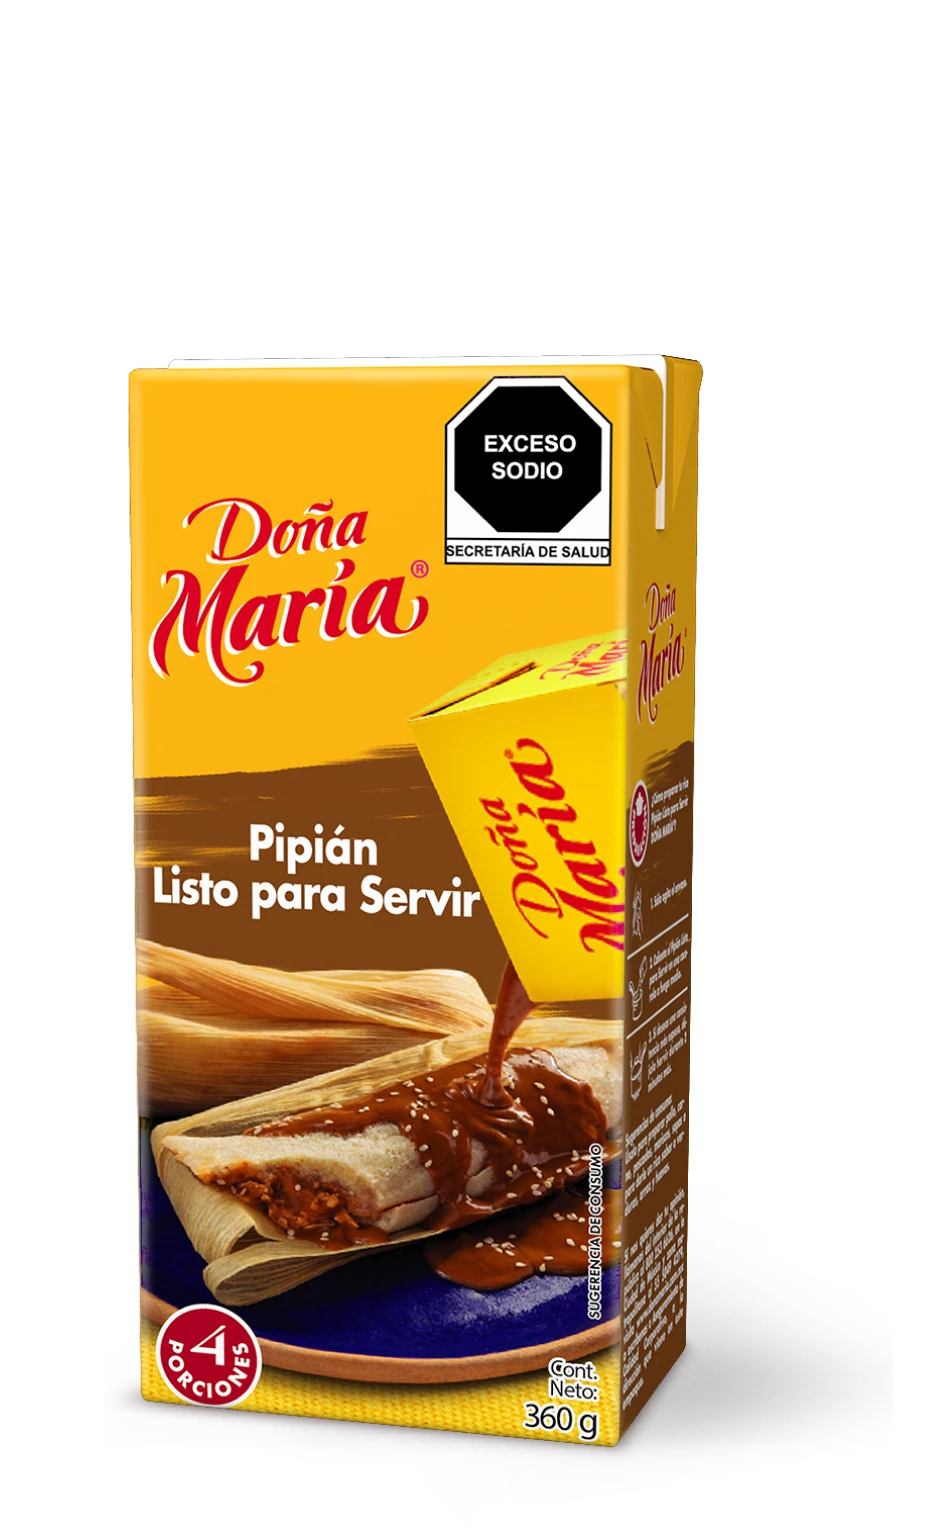 Product Mole Pipián Doña María ®